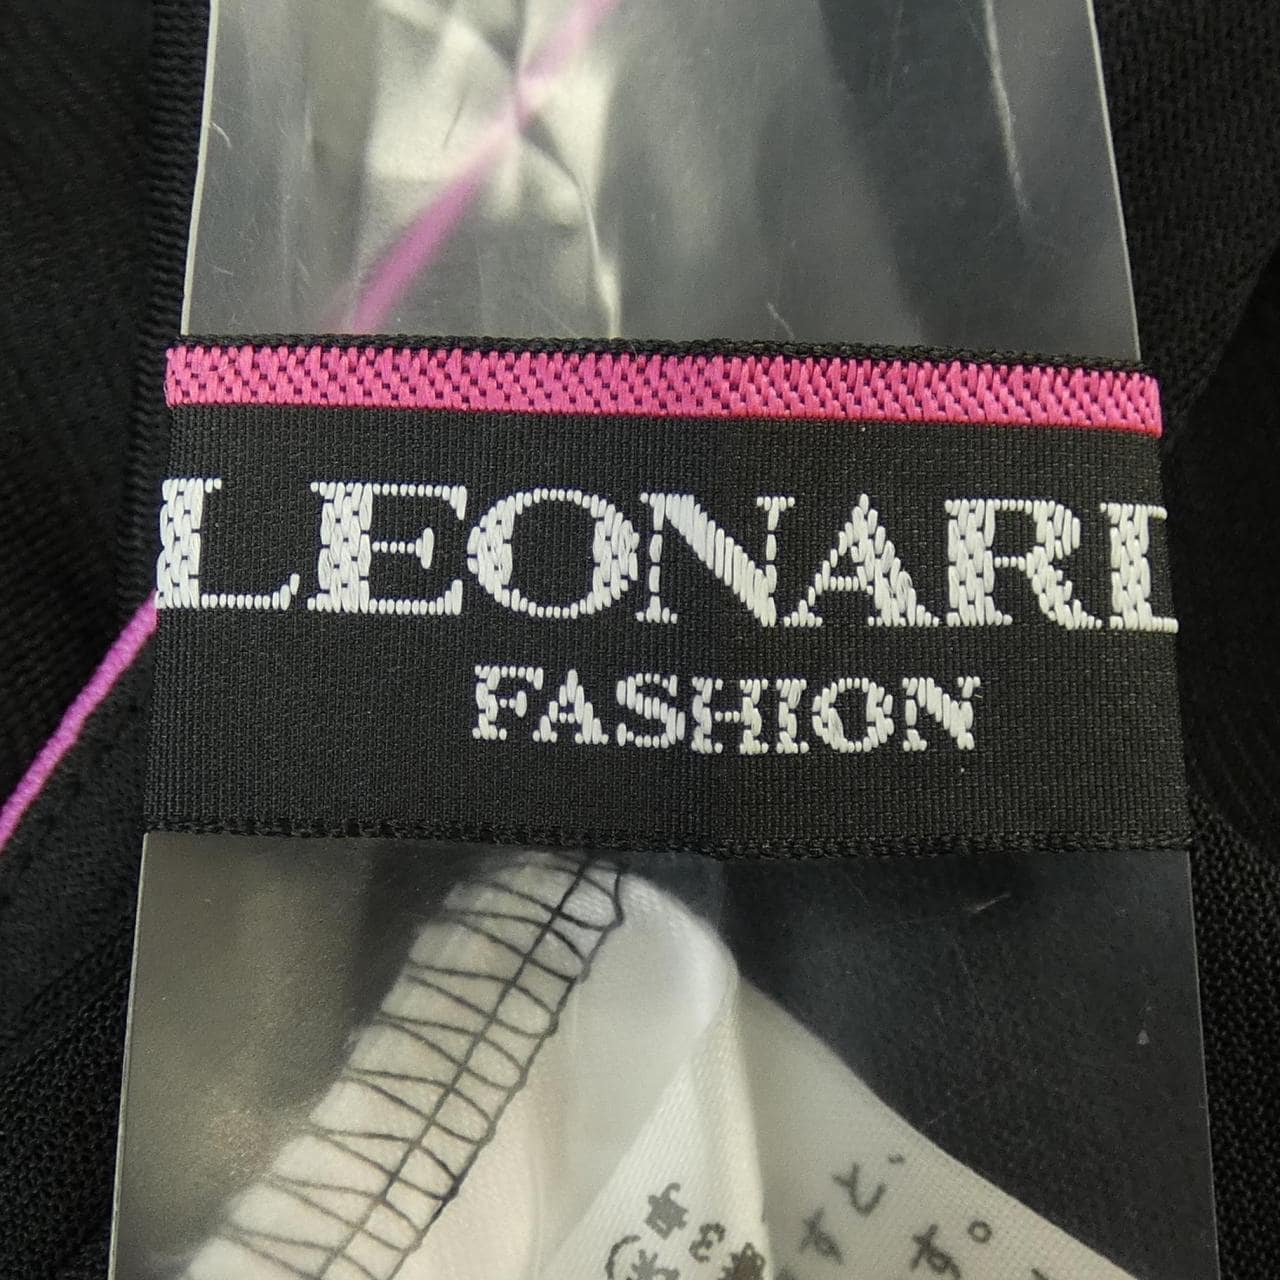 萊昂納多時尚LEONARD FASHION套裝